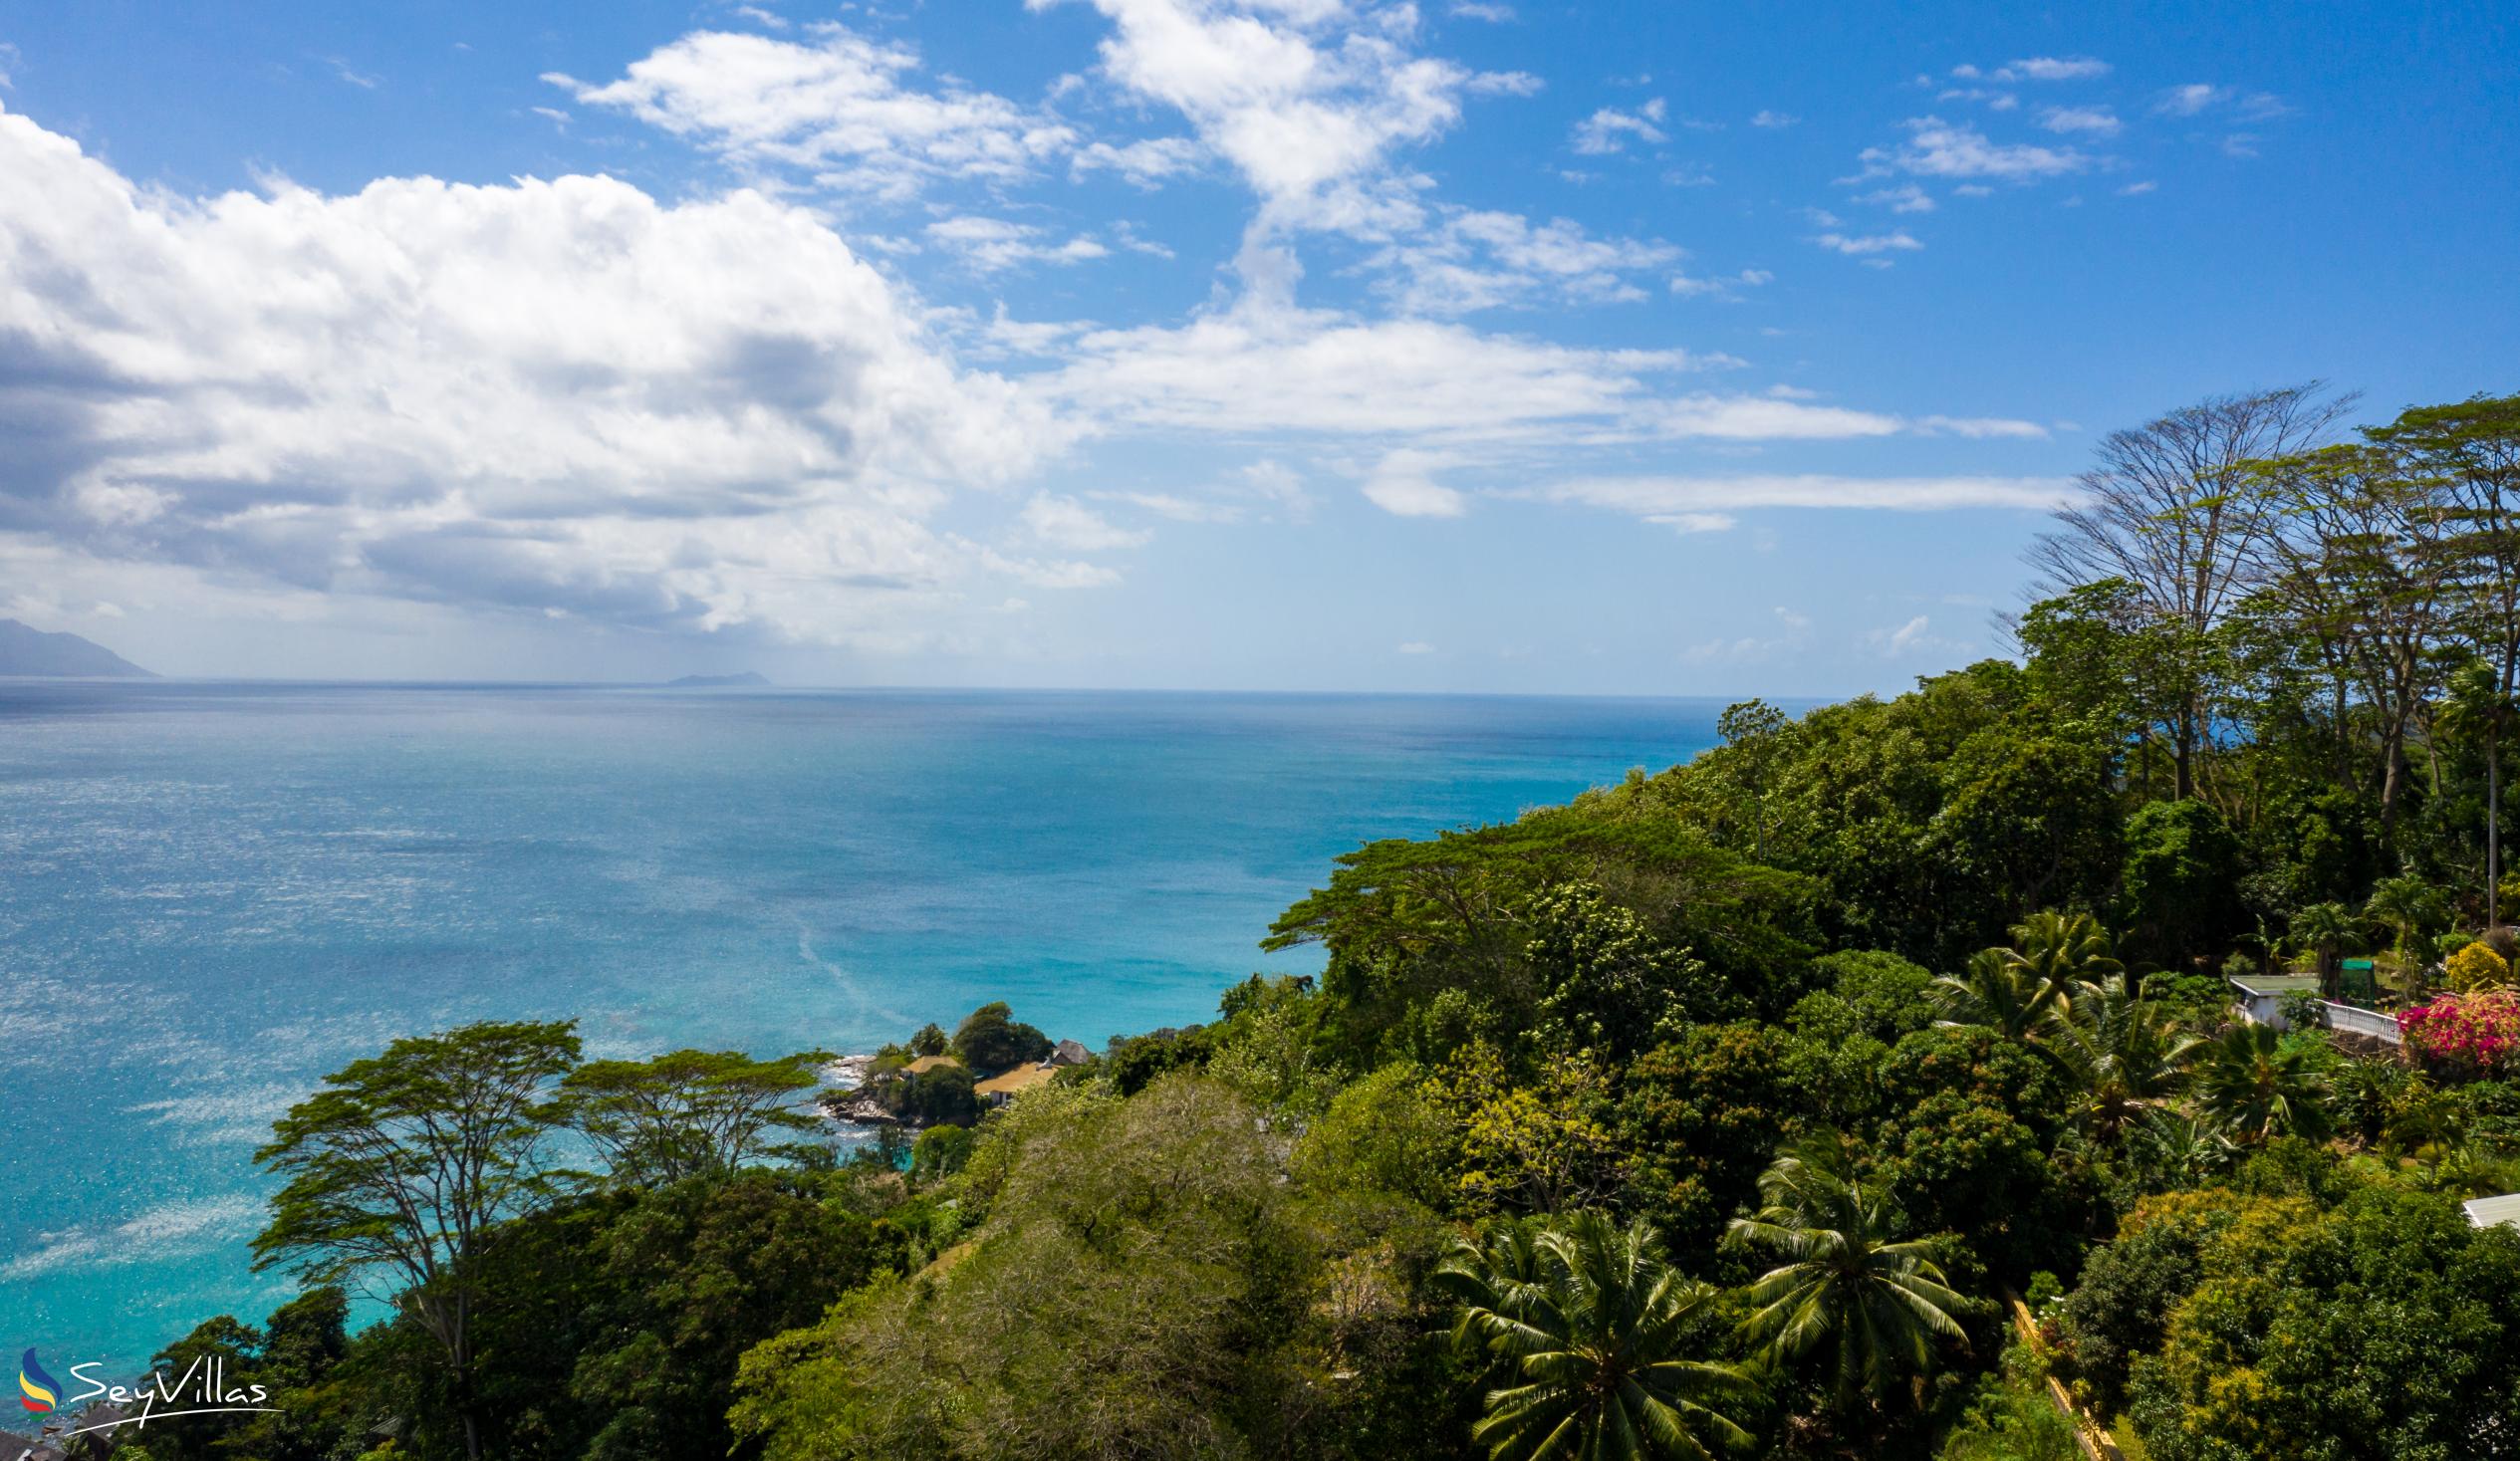 Photo 21: Reve Bleu - Location - Mahé (Seychelles)